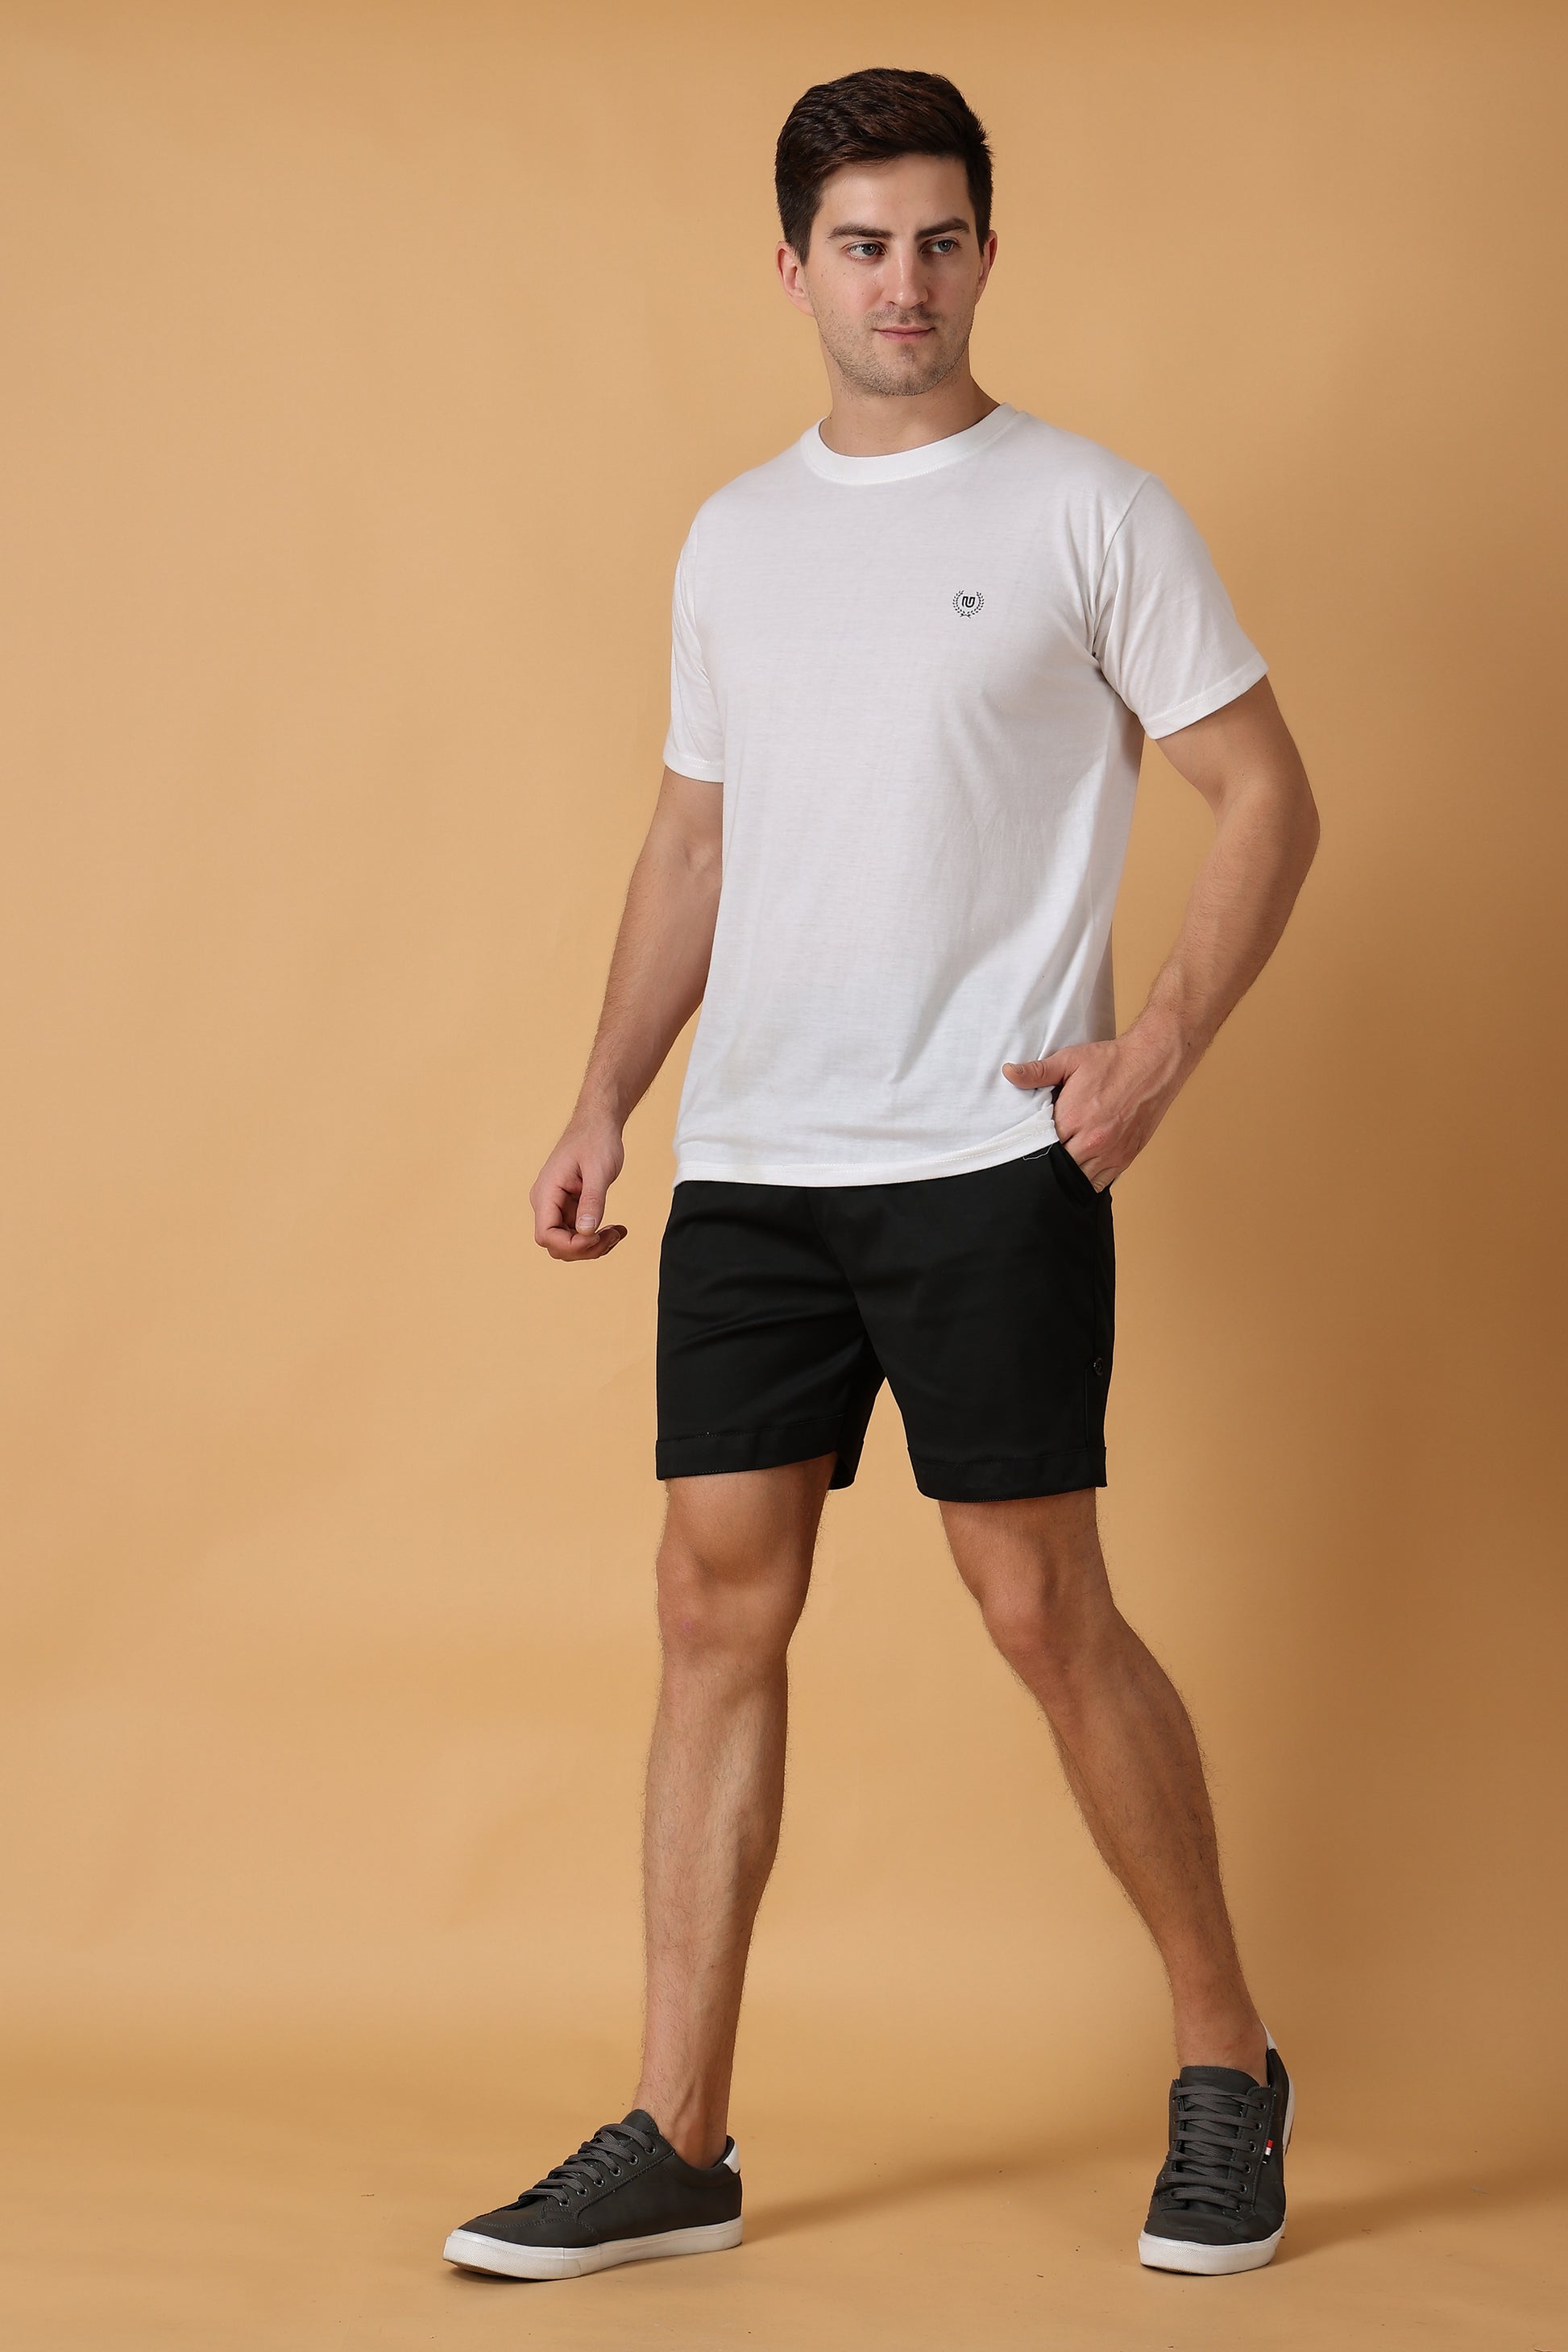 Shorts For Men 